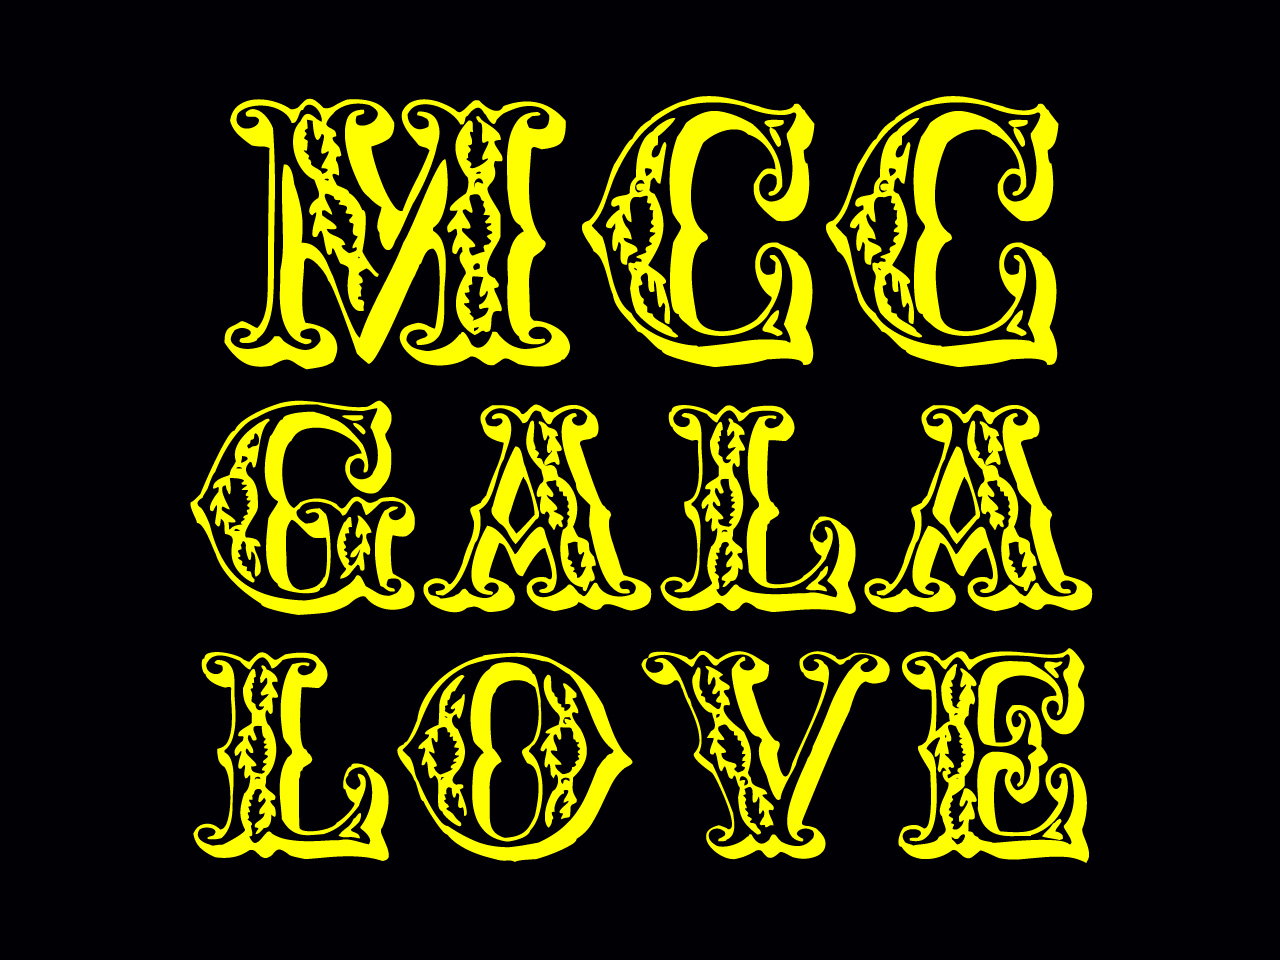 MCC GALA LOVE